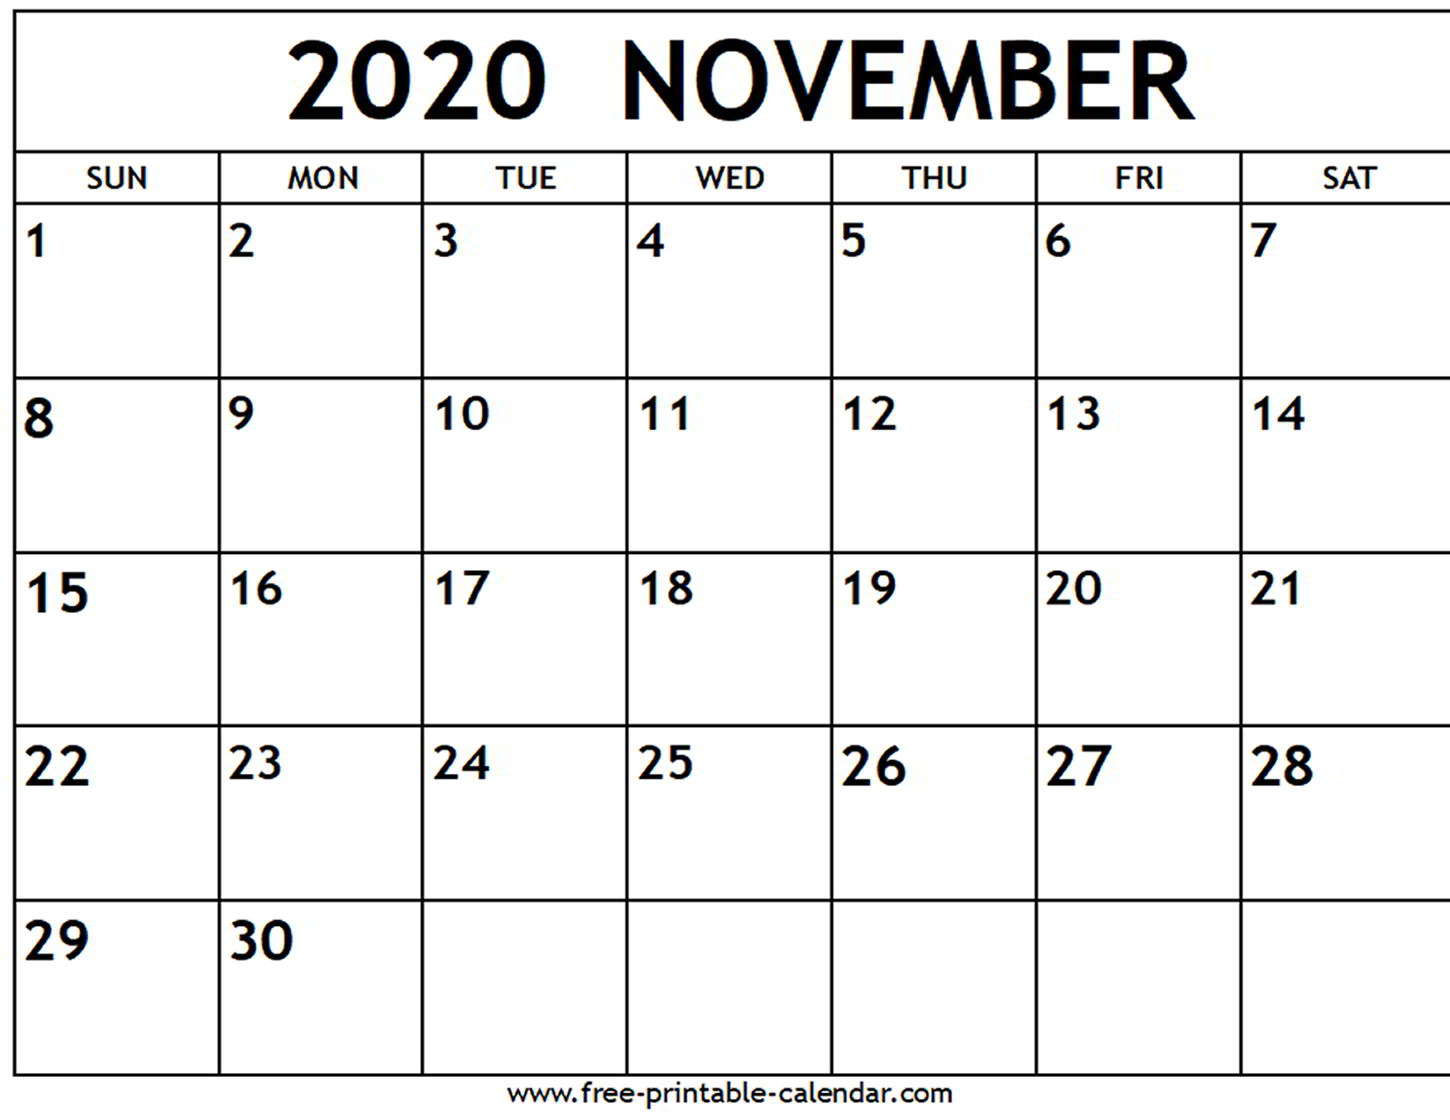 November 2020 Calendar Editable - Wpa.wpart.co